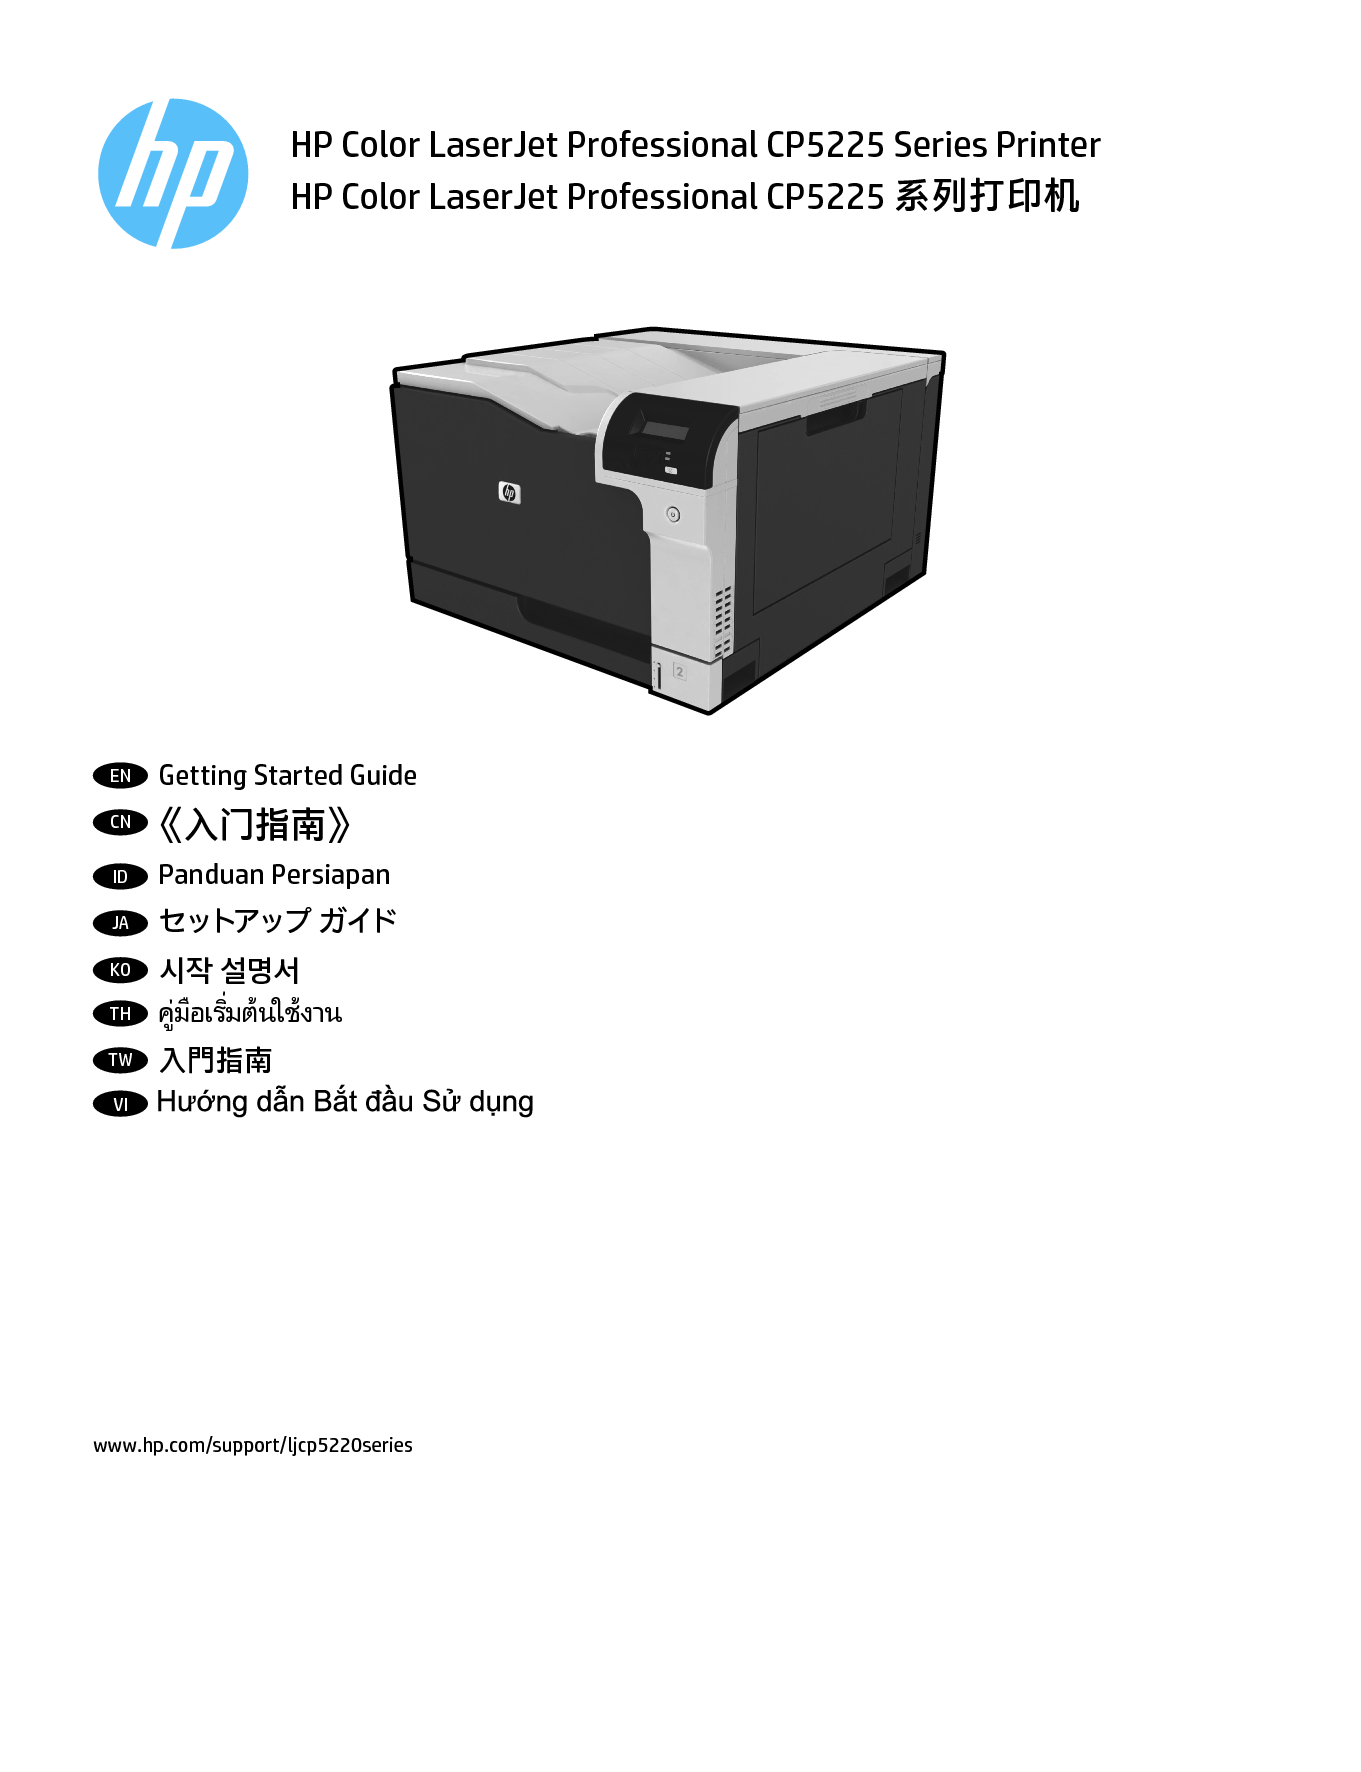 惠普 HP Color LaserJet Professional CP5225 快速入门指南 封面